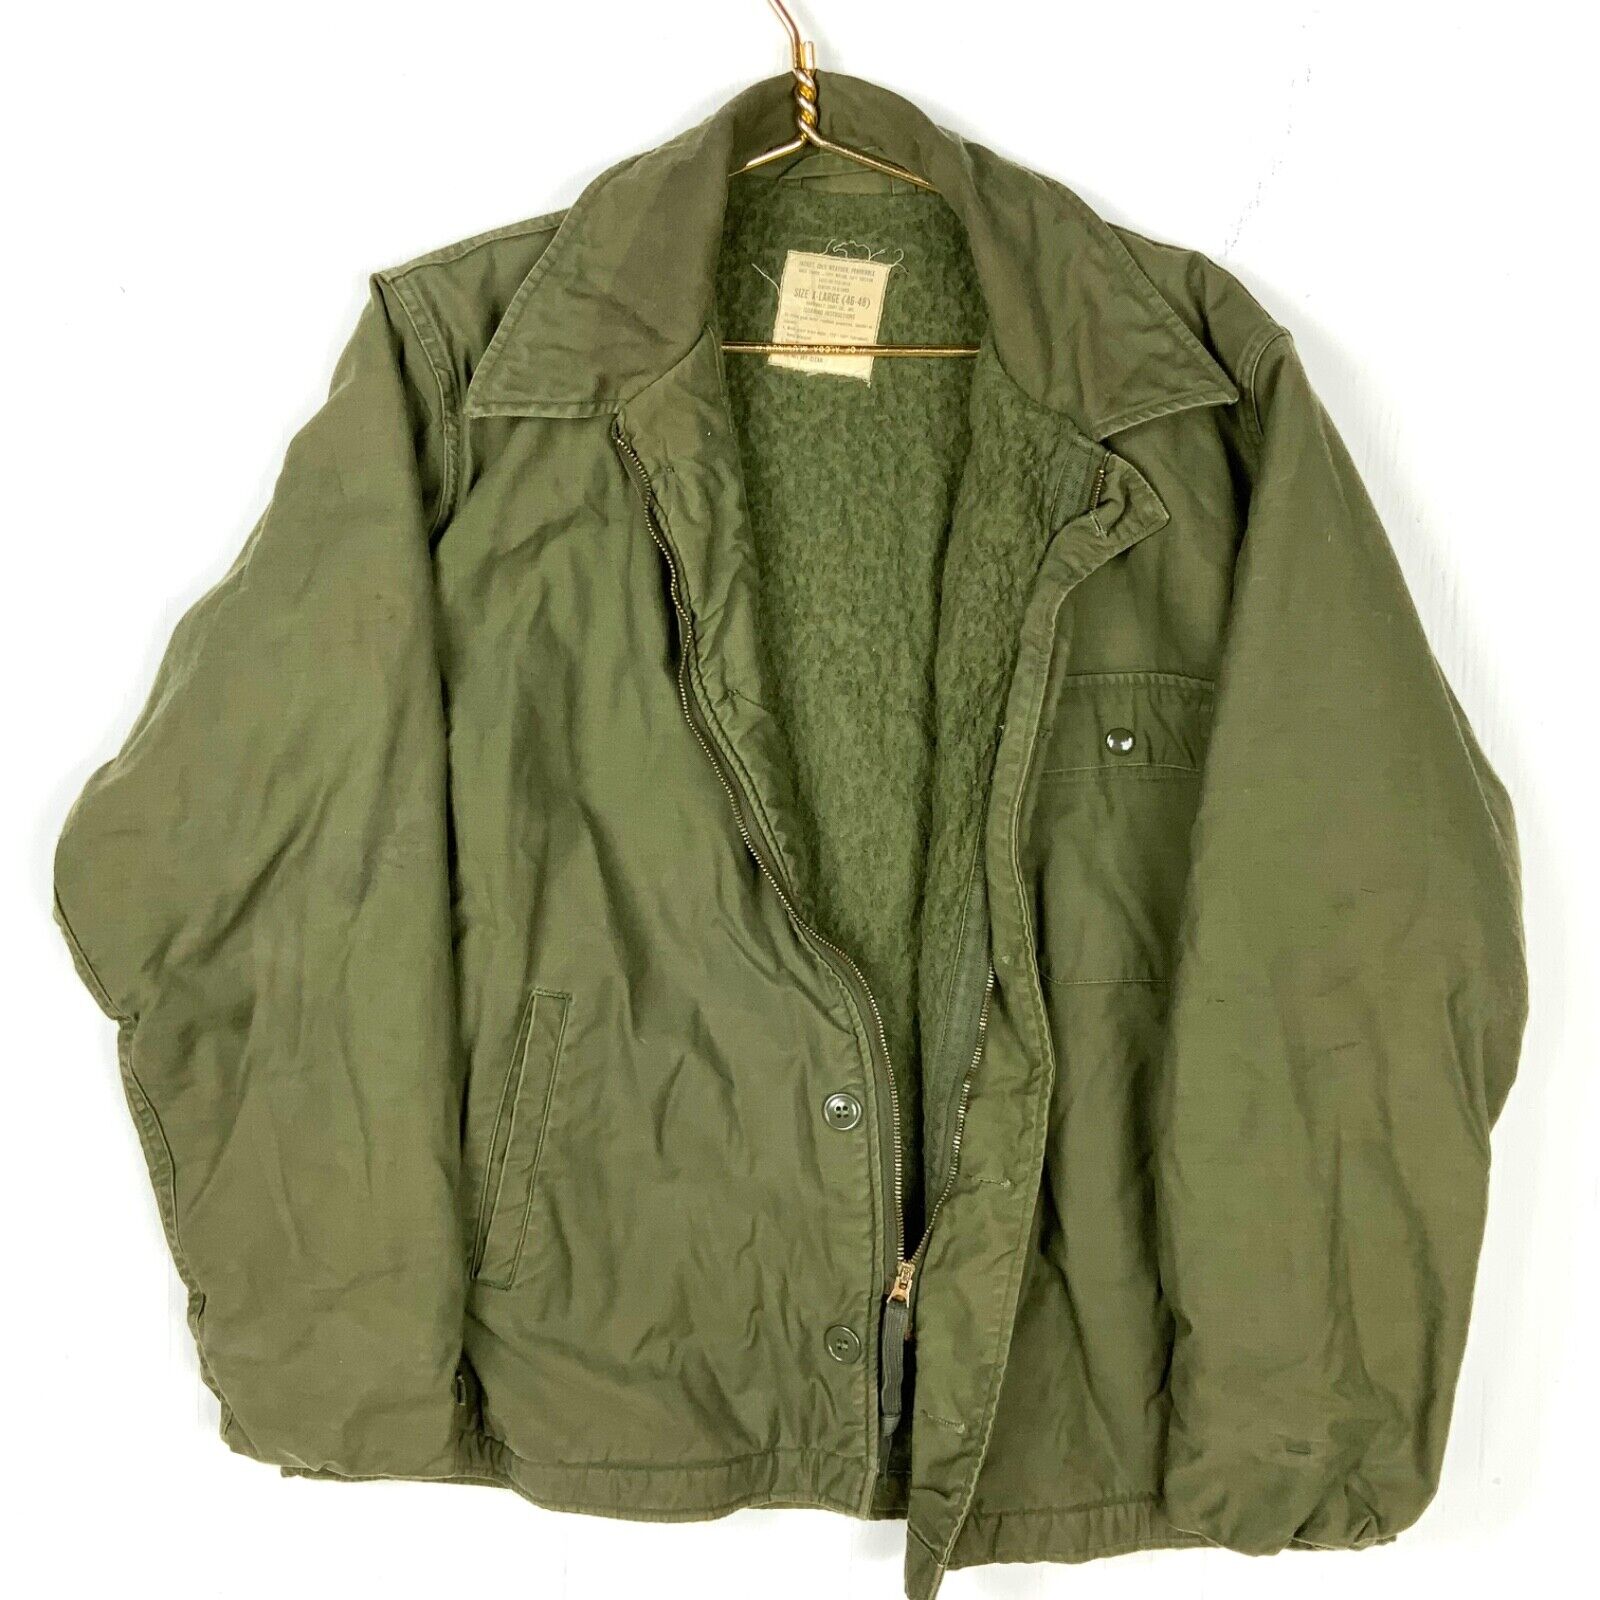 Vintage Us Military Cold Weather A-2 Jacket Size XL Green Vietnam Era 1975